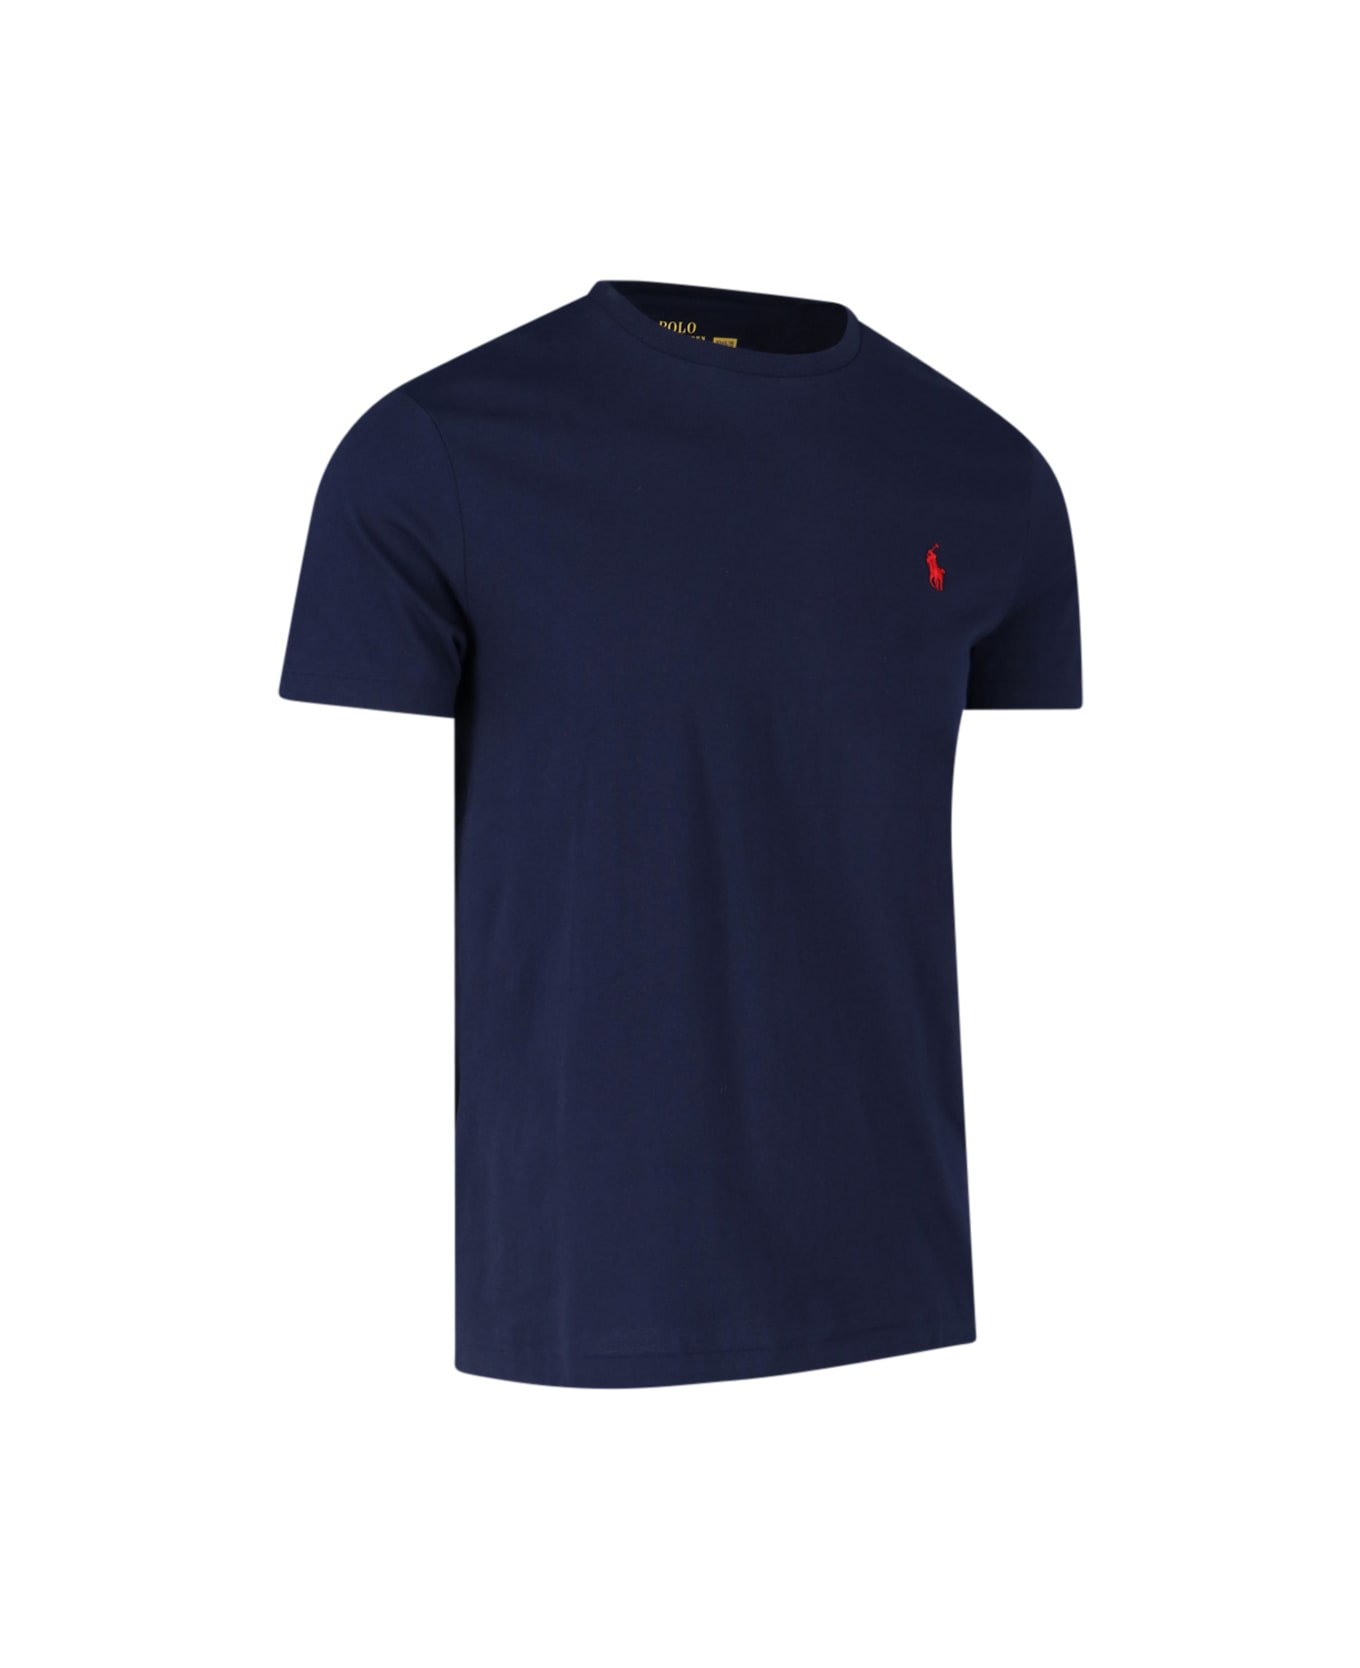 Polo Ralph Lauren Classic Logo T-shirt T-Shirt - INCHIOSTRO